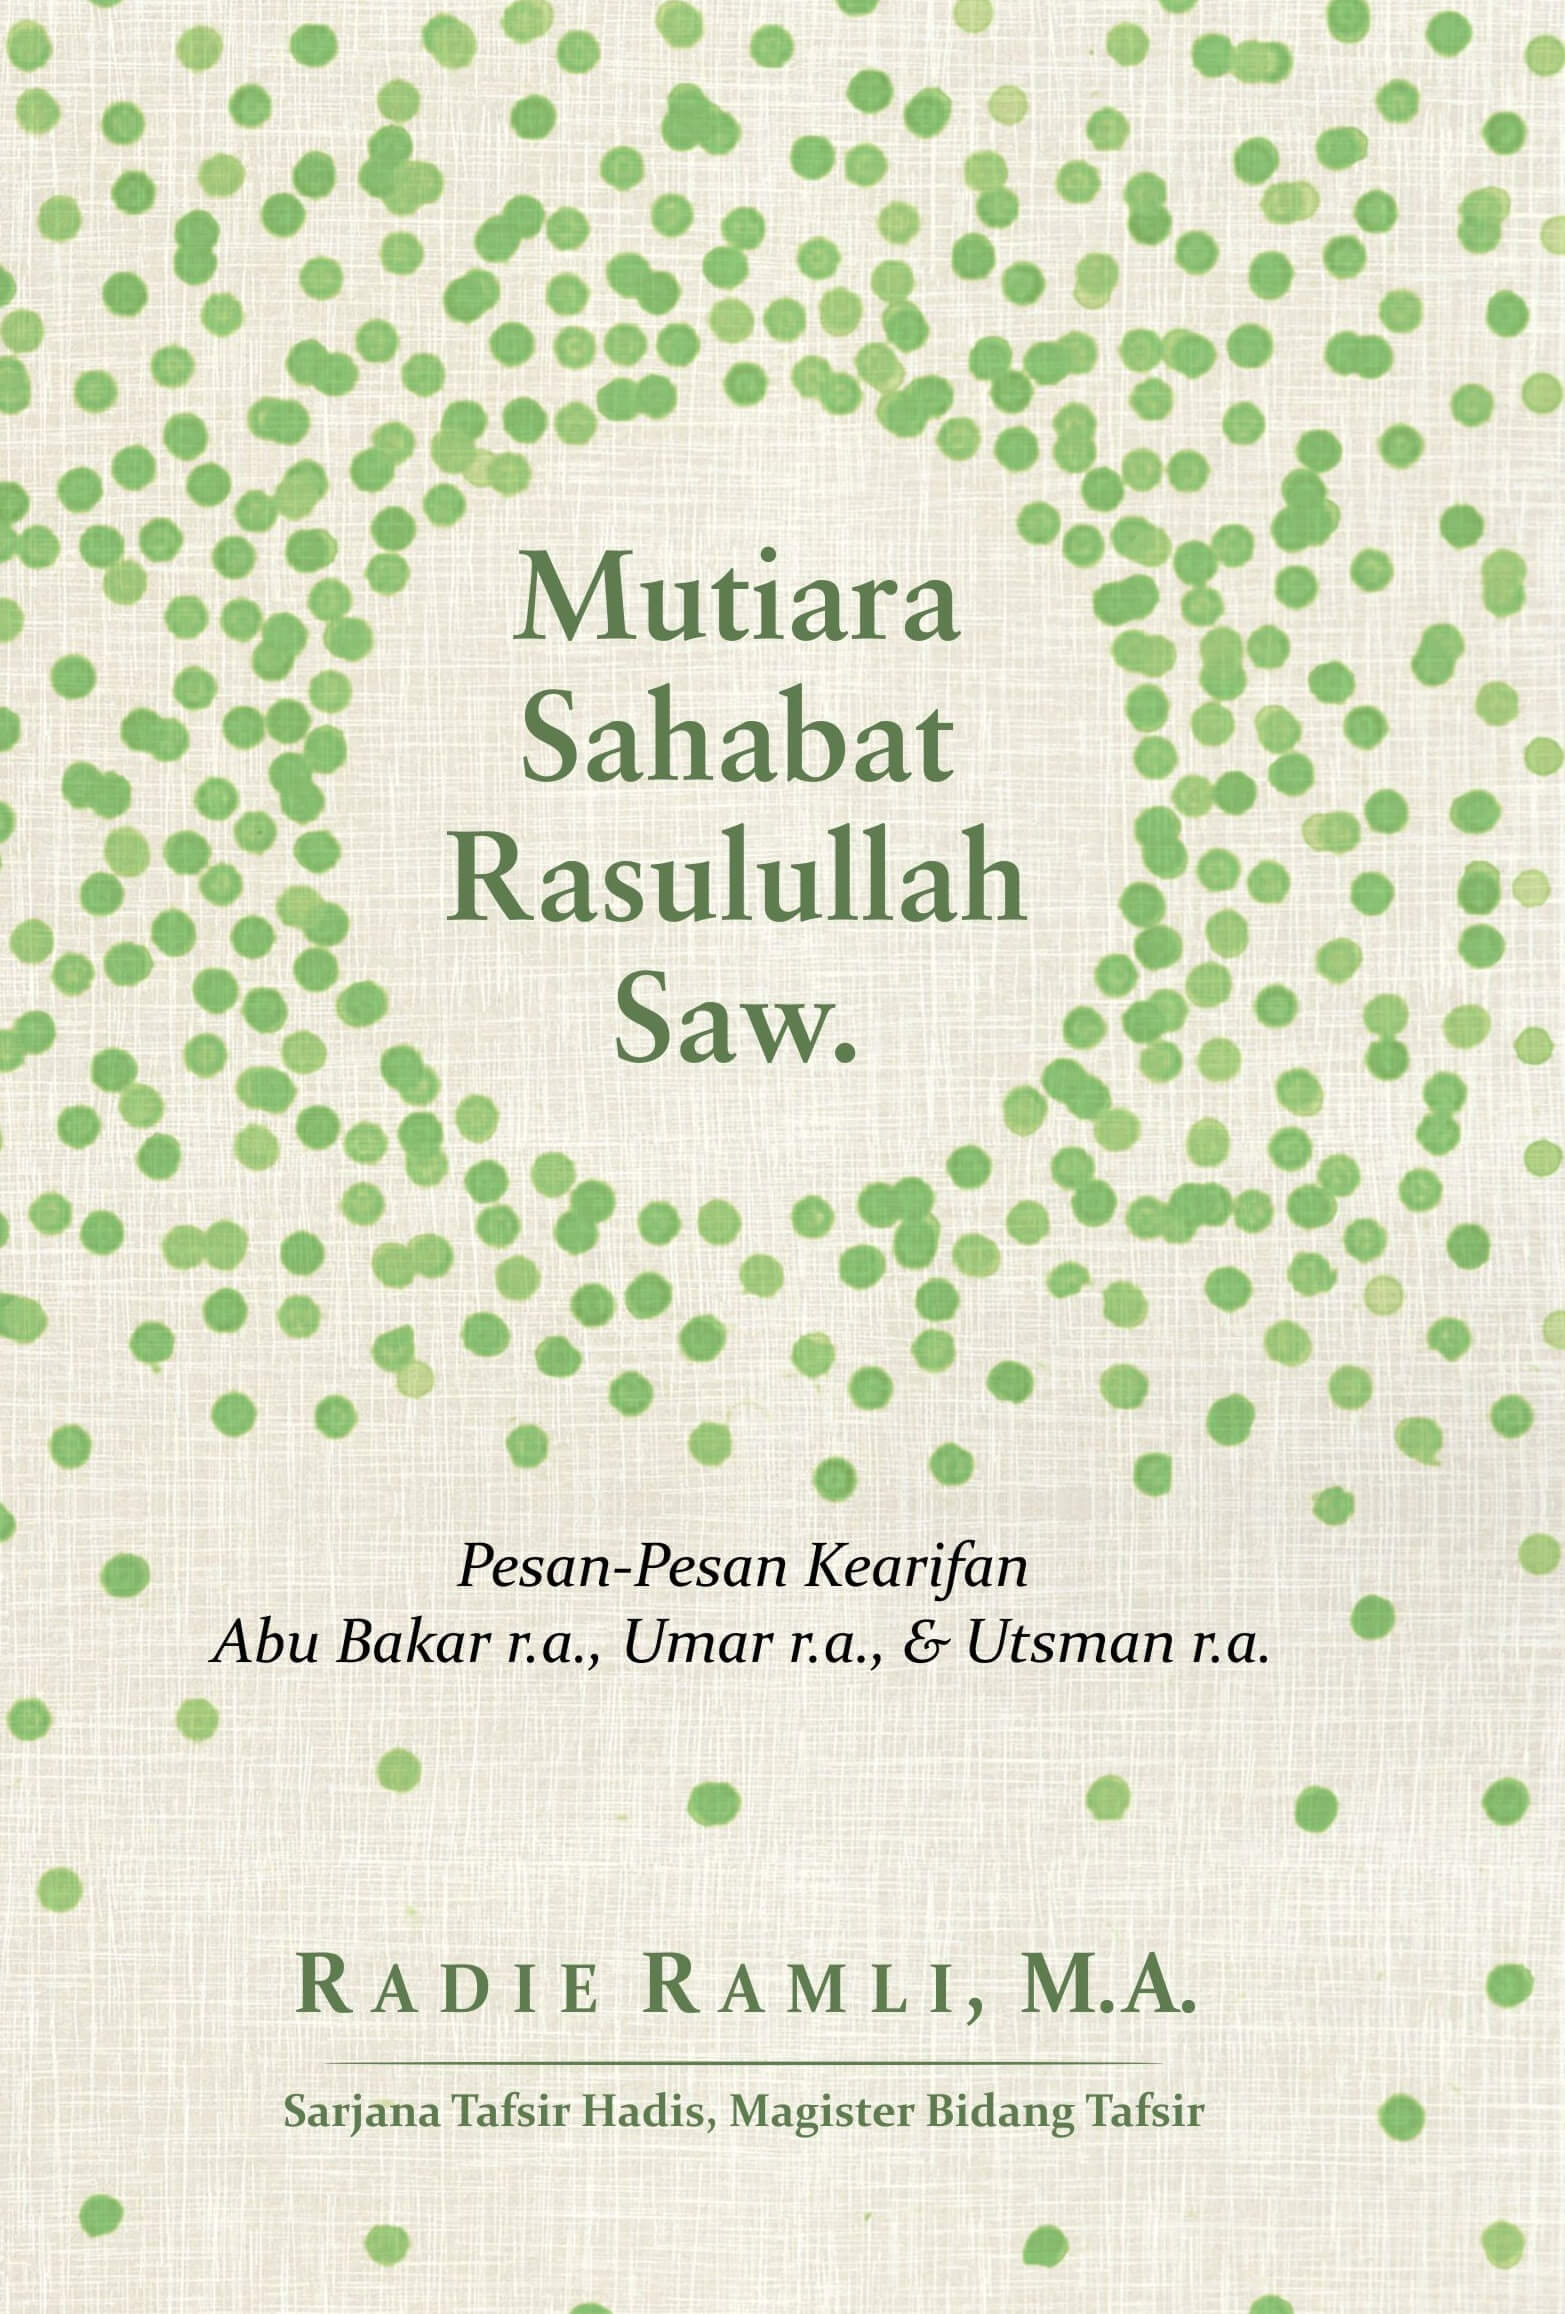 Buku MUTIARA SAHABAT RASULULLAH RADIE RAMLI Mizanstore